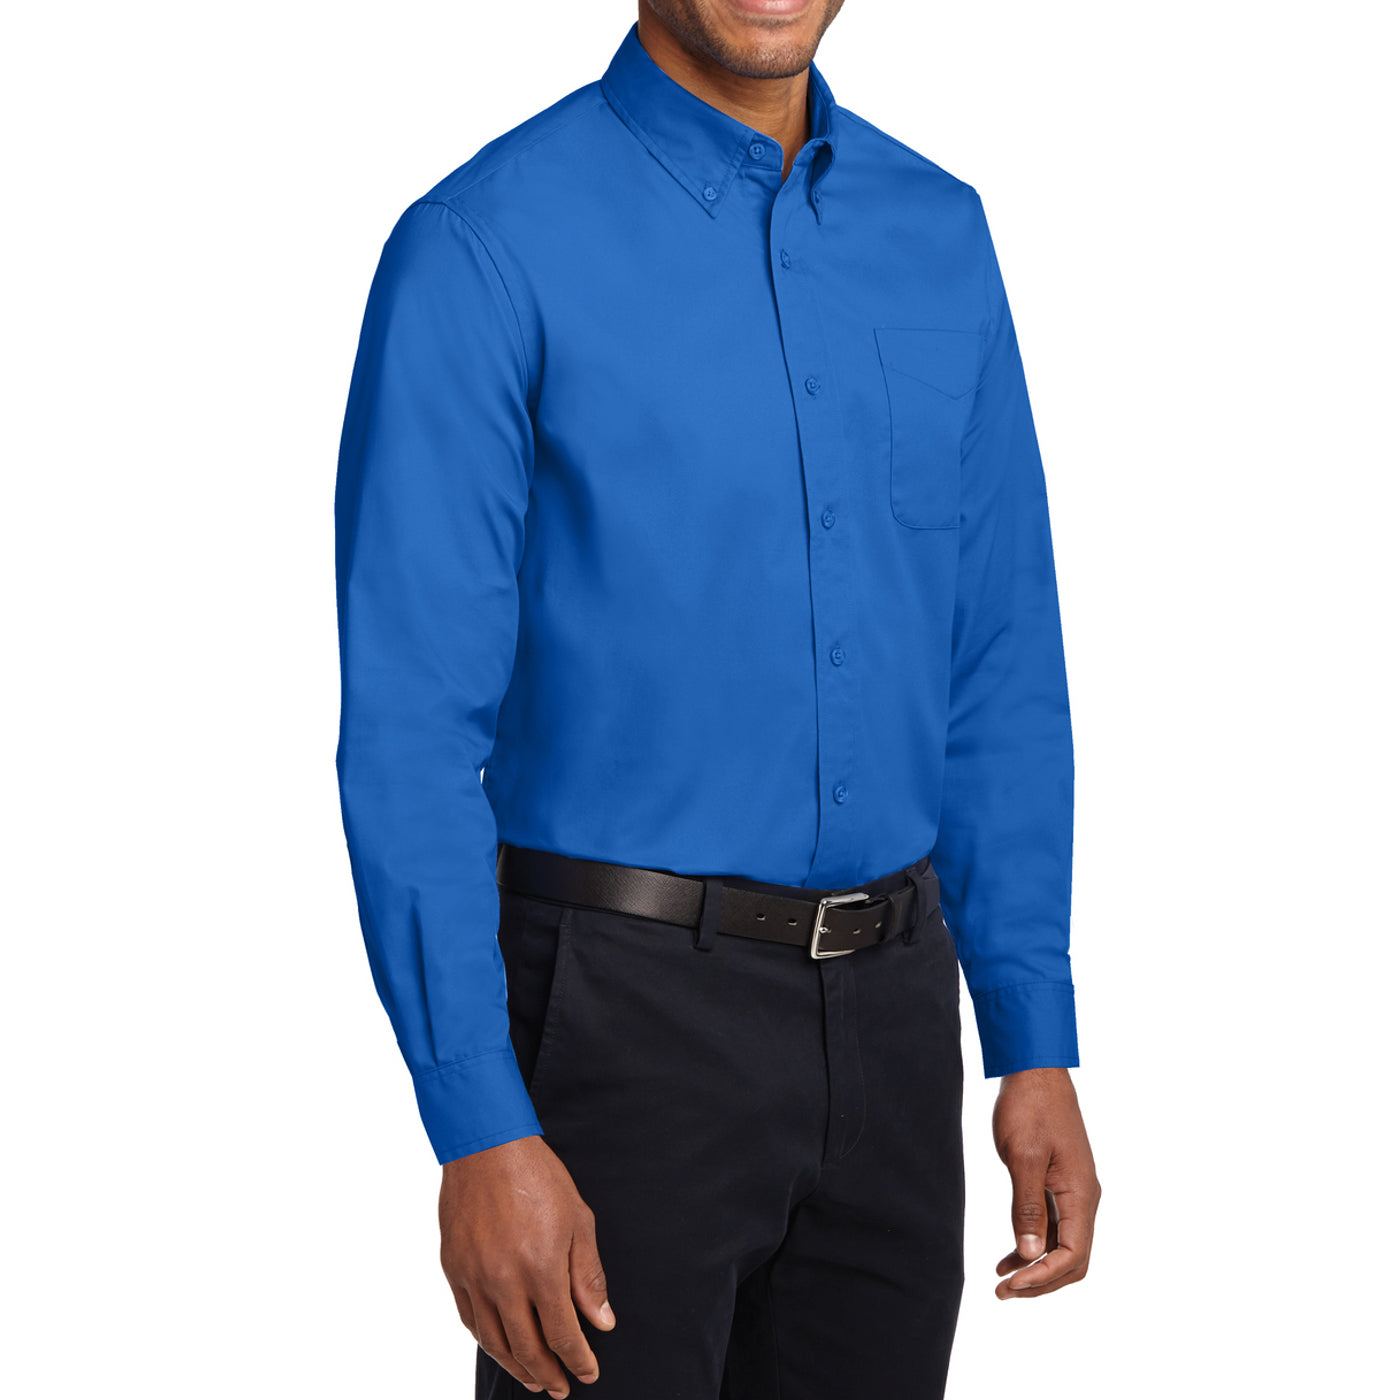 Men's Long Sleeve Easy Care Shirt - Strong Blue - Side